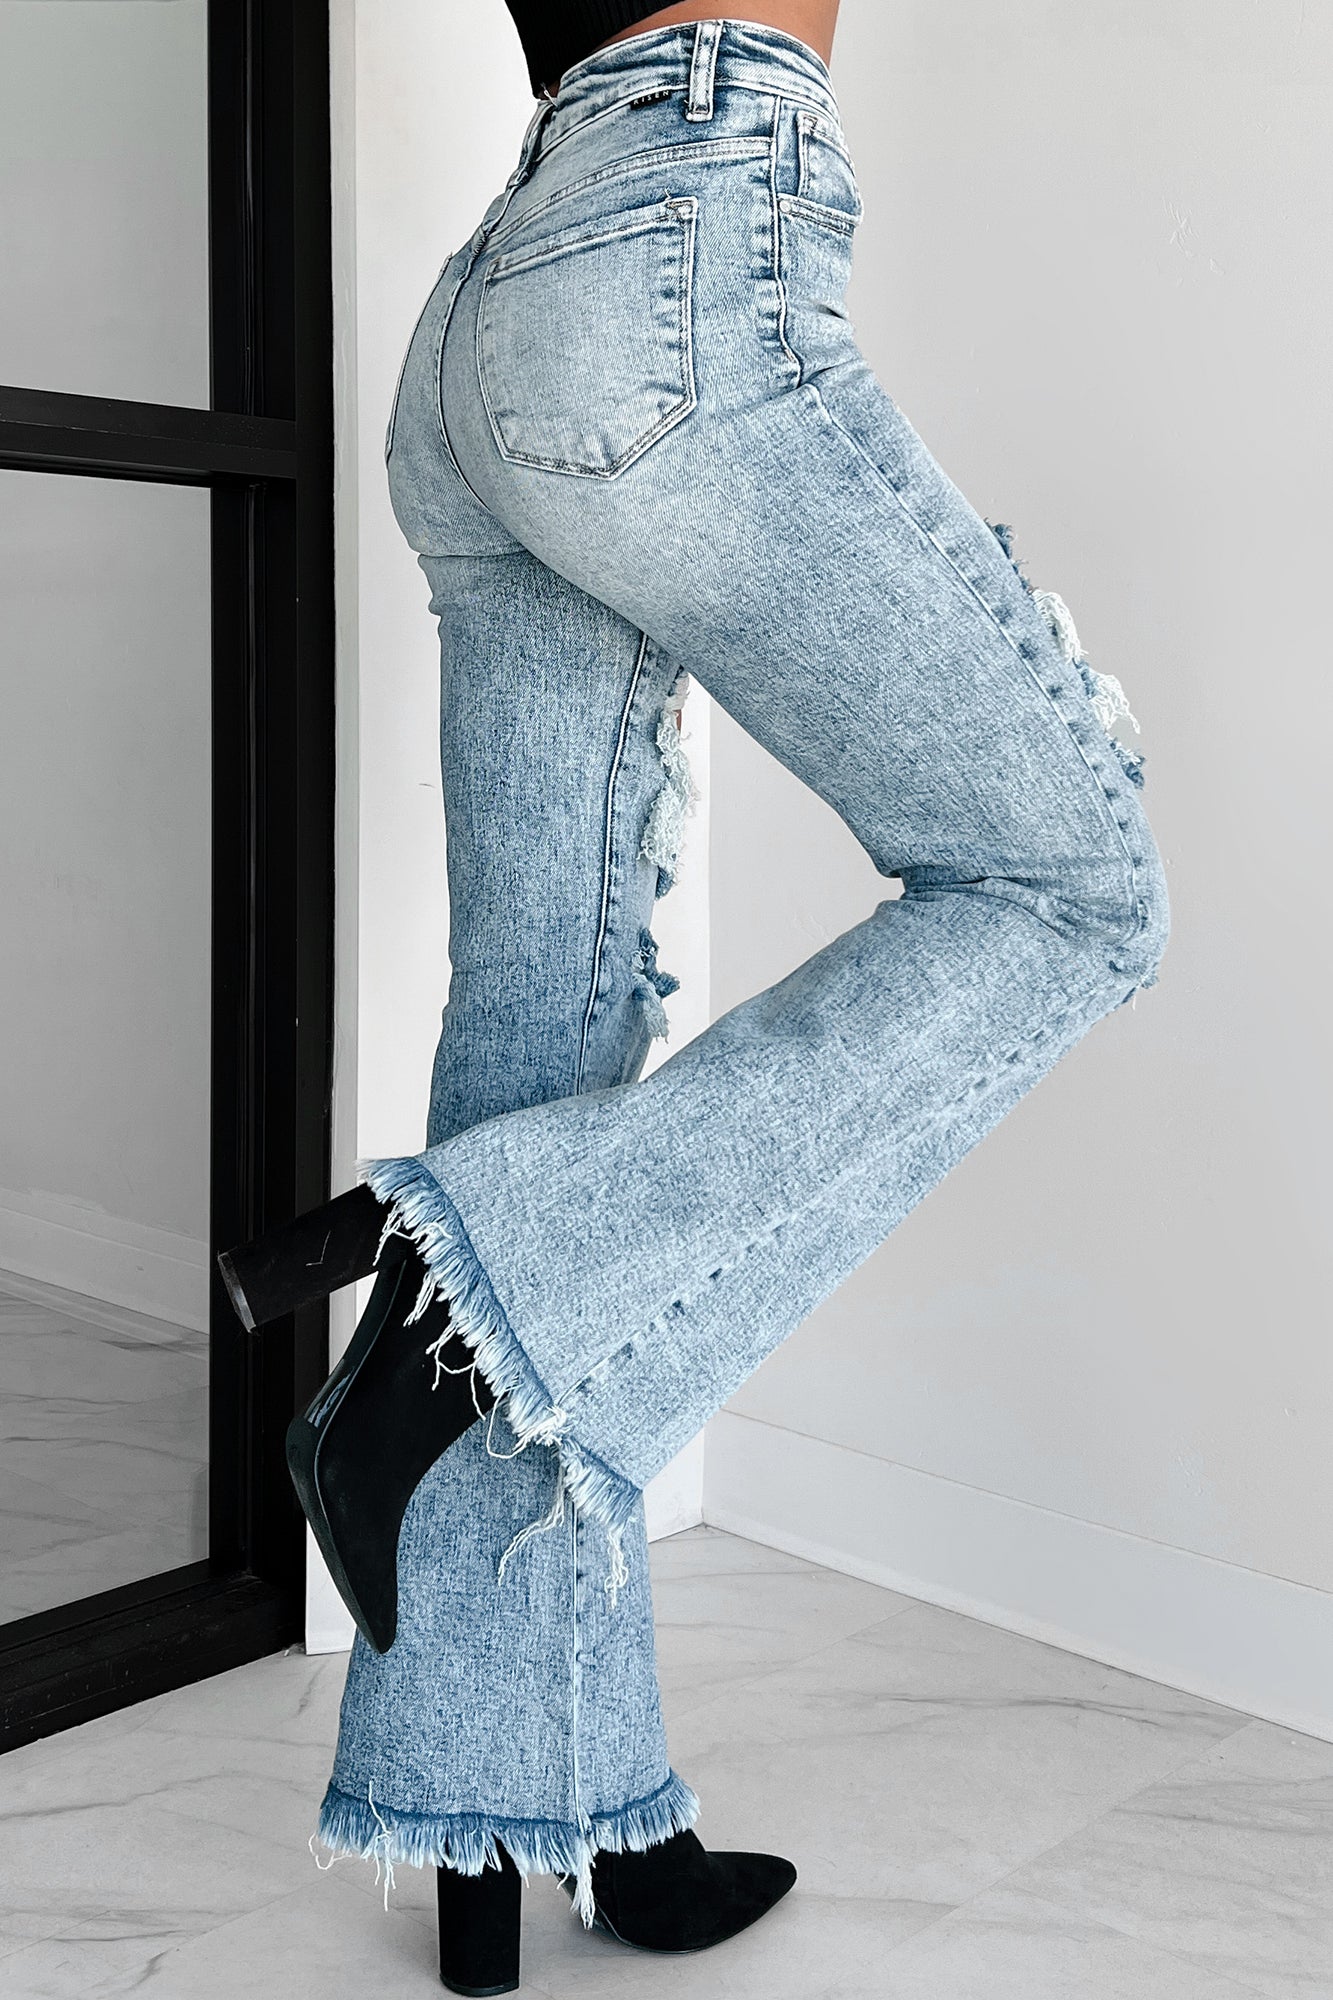 Evangeline High Rise Distressed Risen Flare Jeans (Medium Acid) - NanaMacs